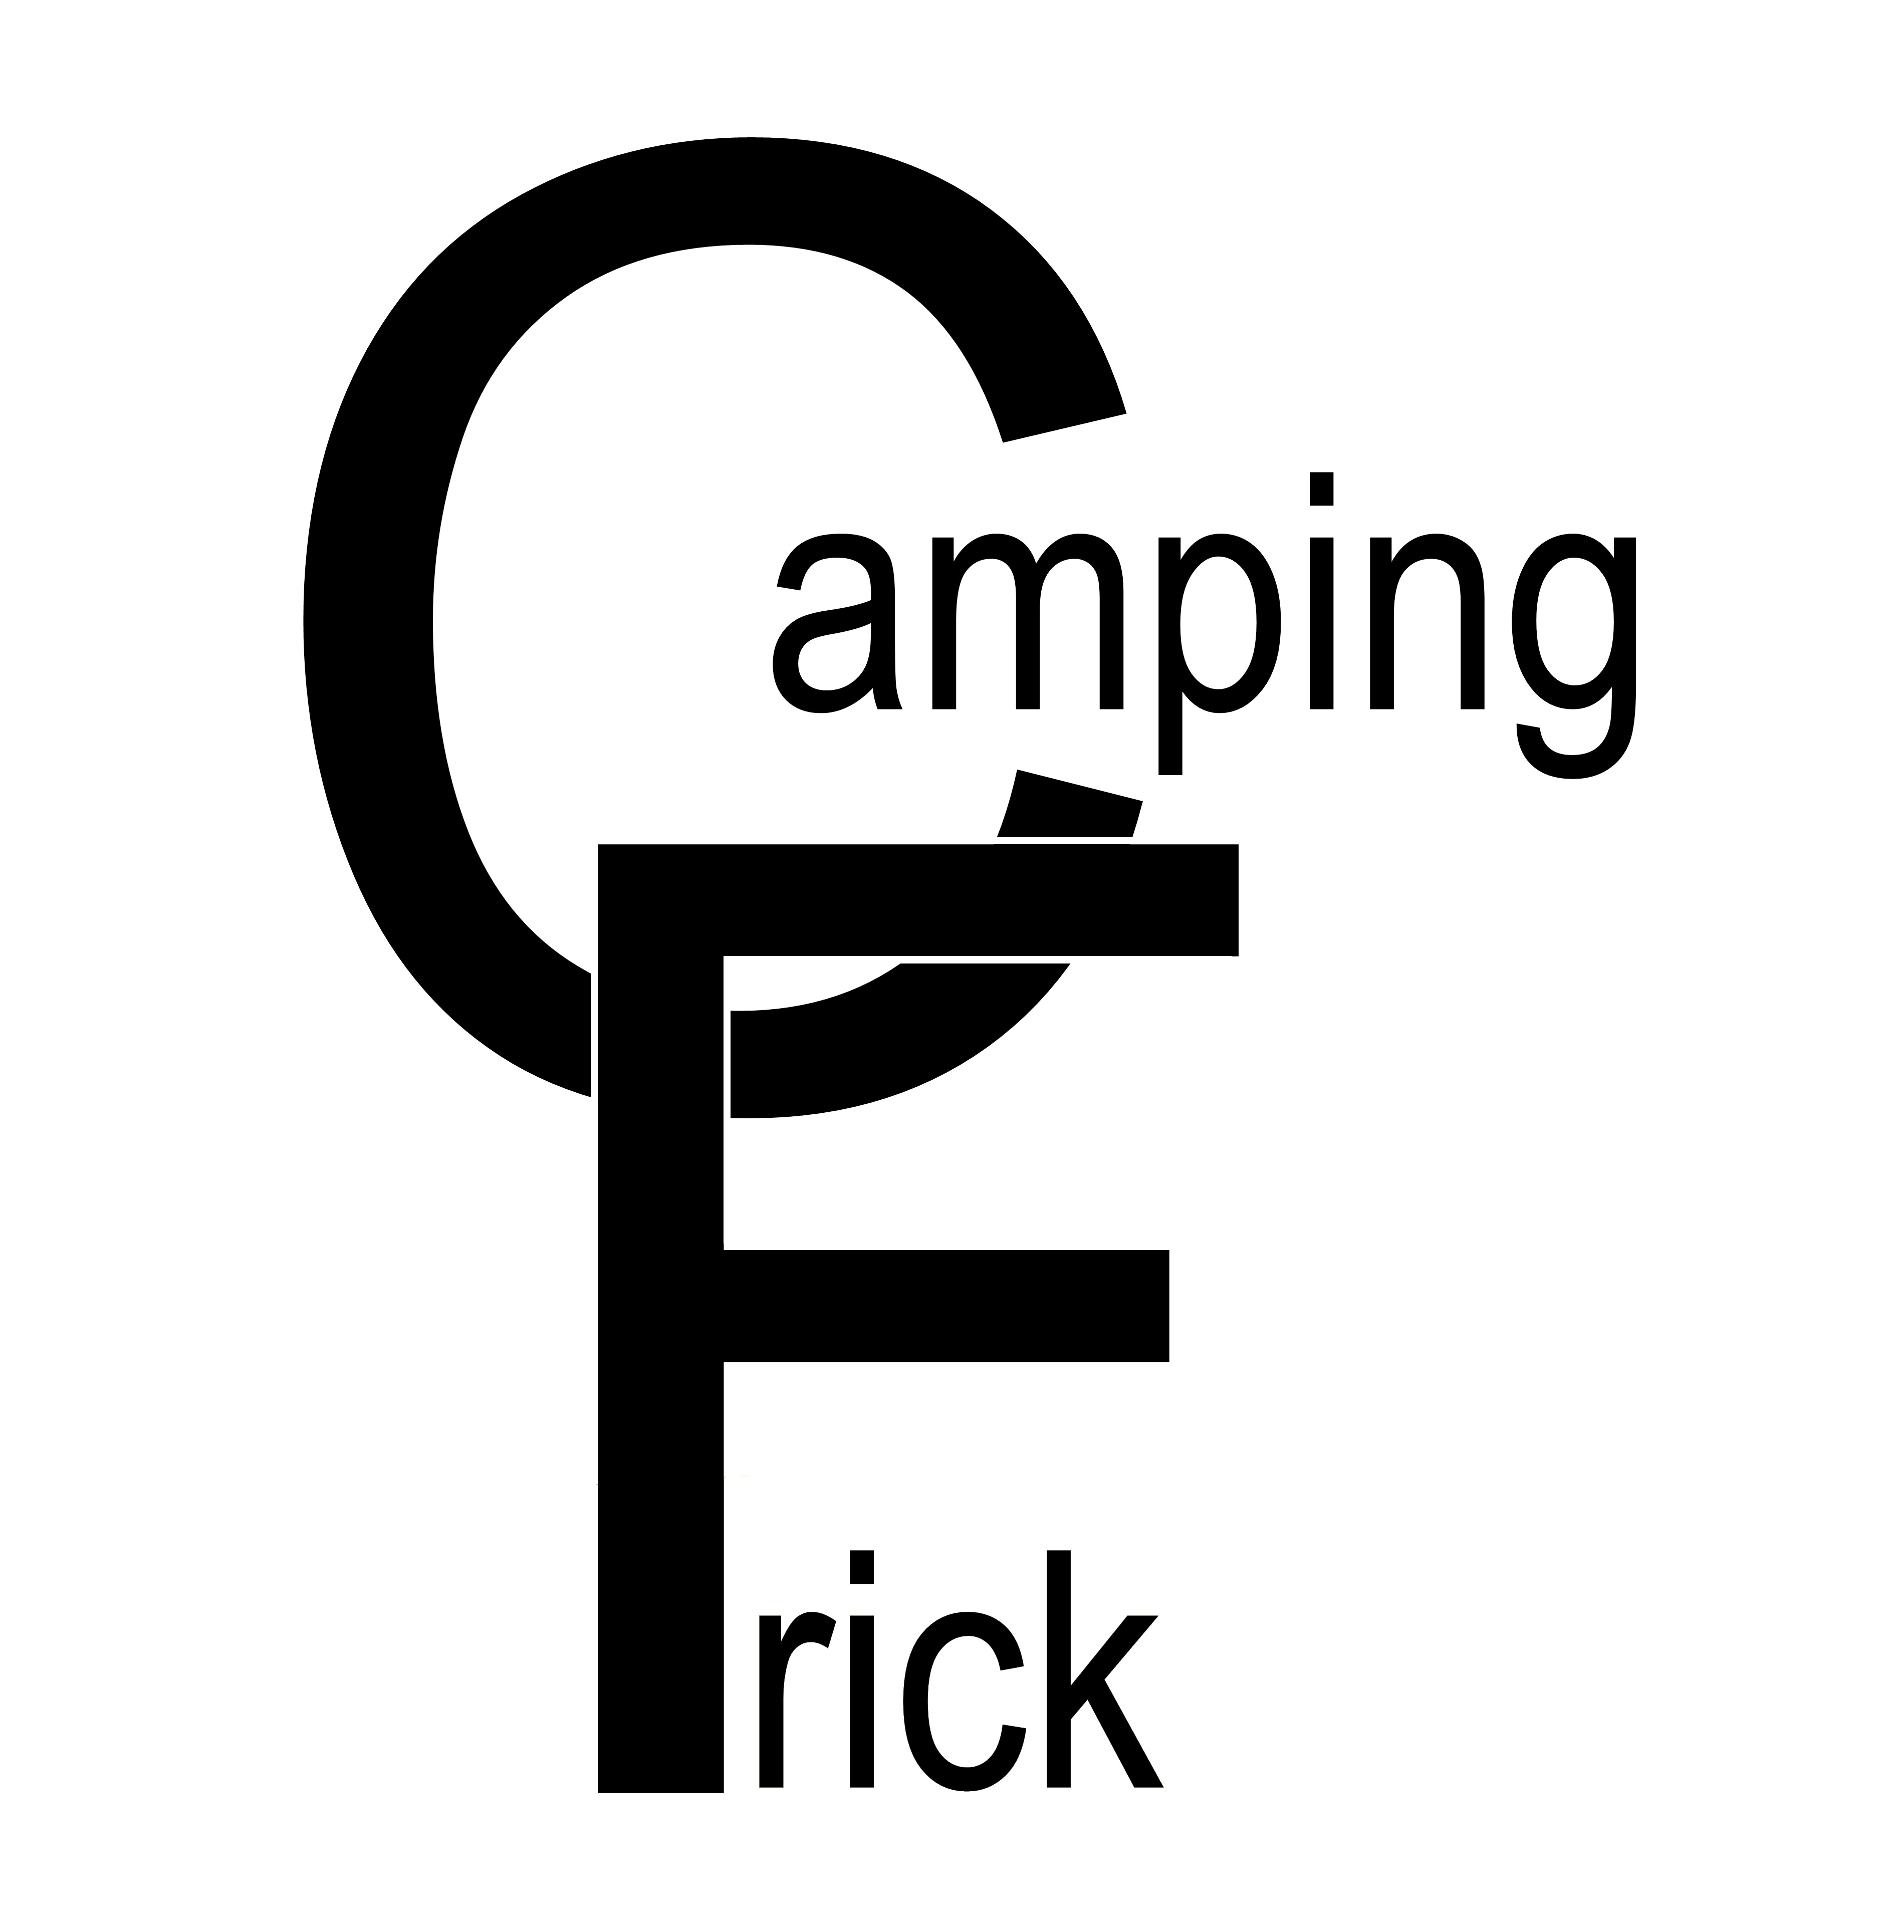 (c) Campingfrick.ch